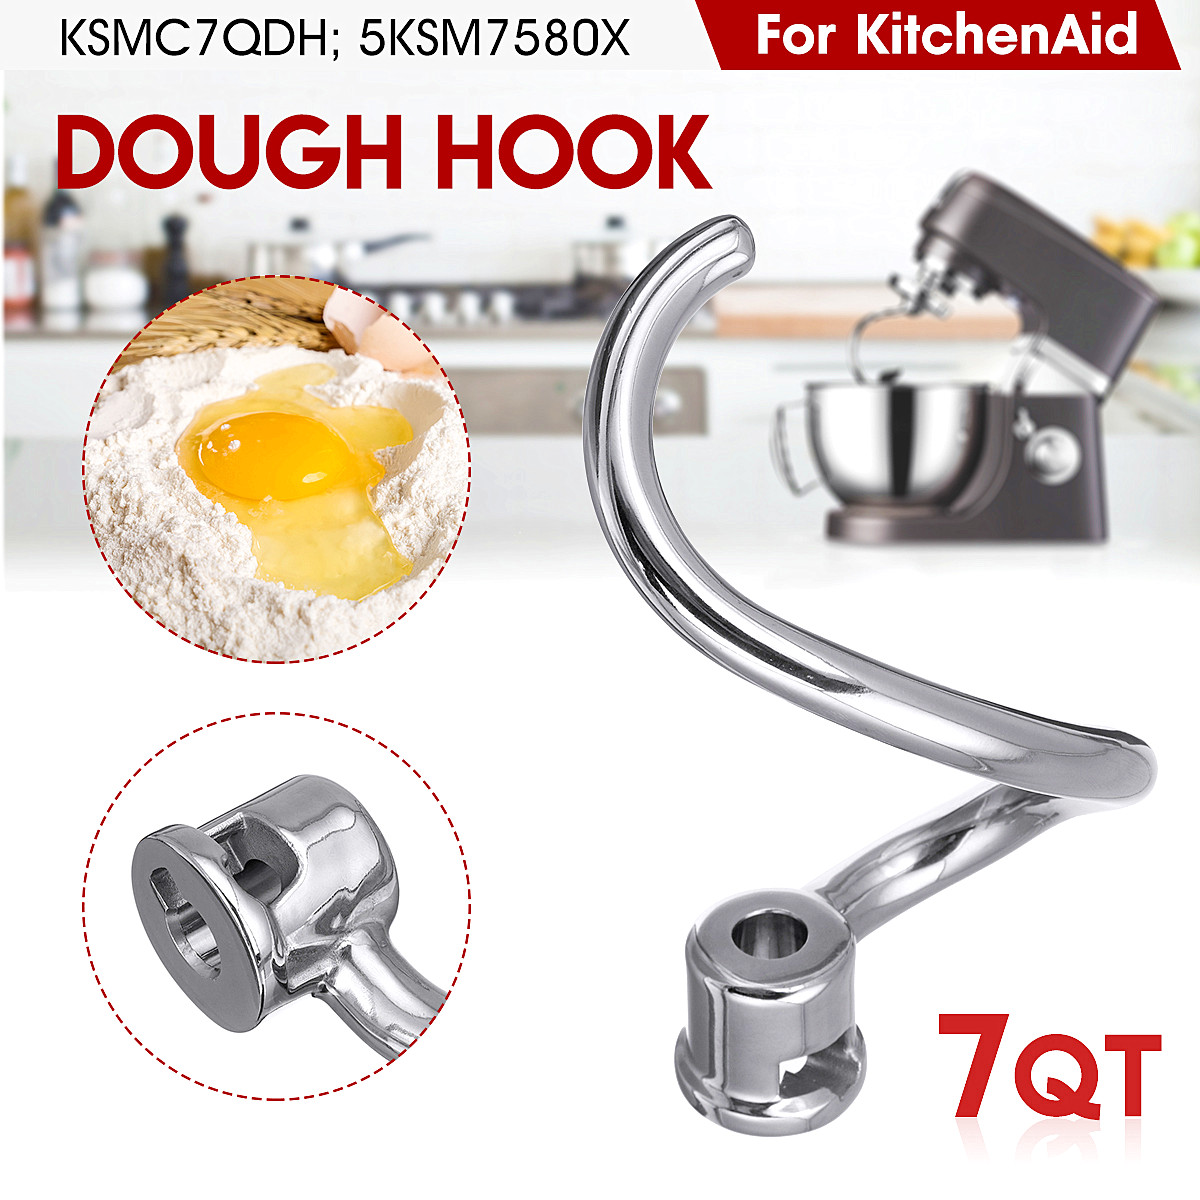 Spiral-Dough-Hook-For-KitchenAid-Mixer-7-QT-KSMC7QDH-5KSM7580X-Stainless-Steel-1452080